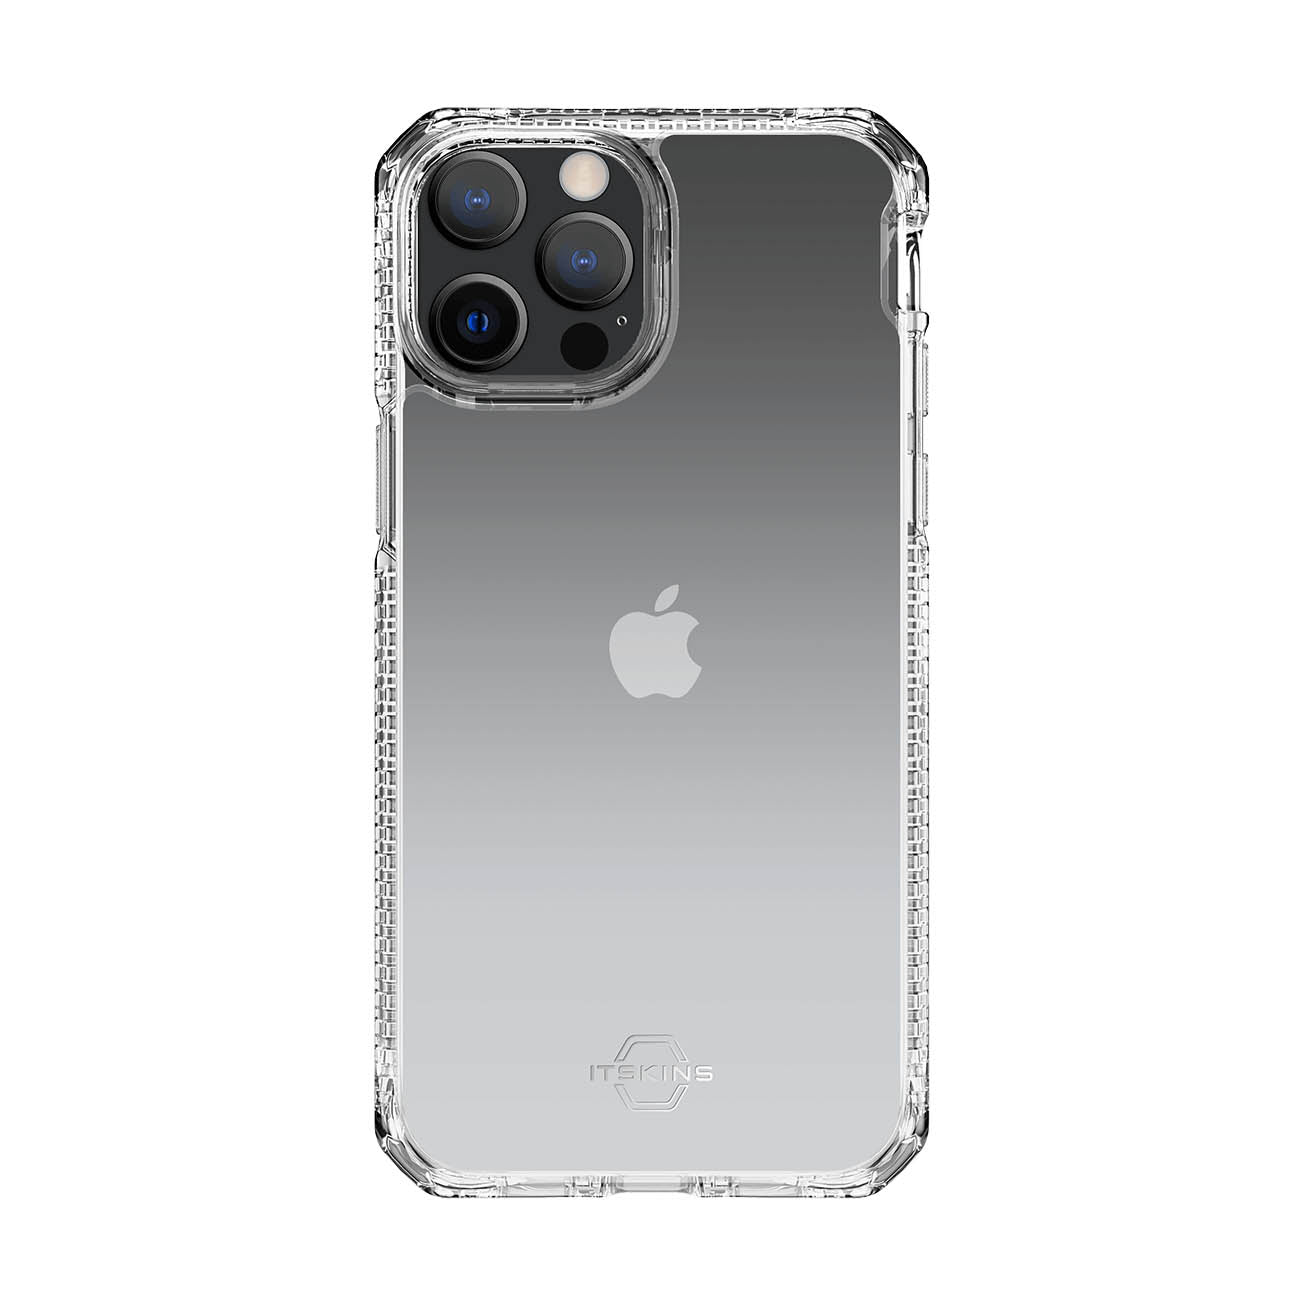 ITSKINS Hybrid Ombre Case For iPhone 13 Pro Max / 12 Pro Max - Glacier